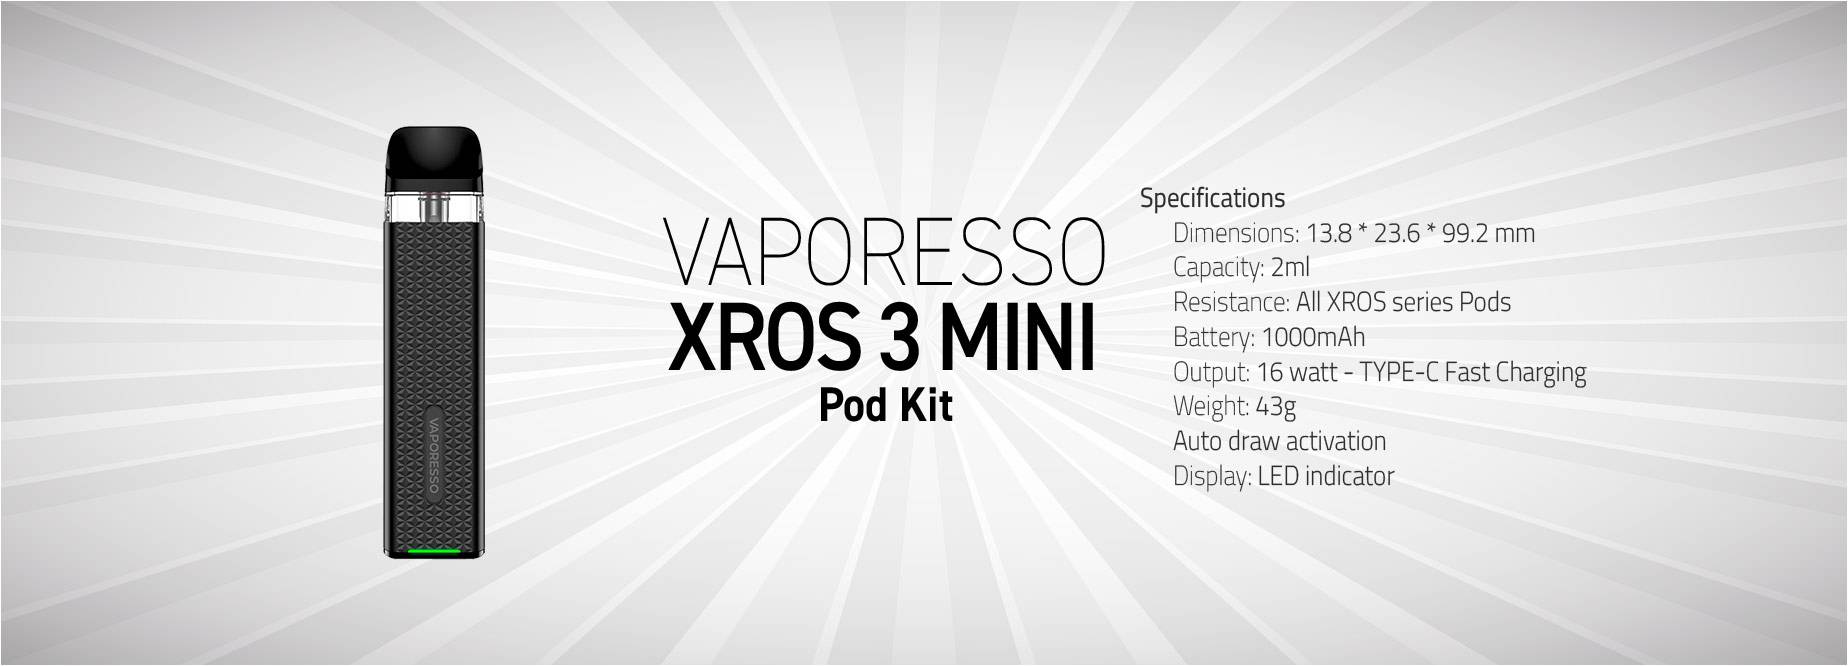 XROS 3 Mini Pod